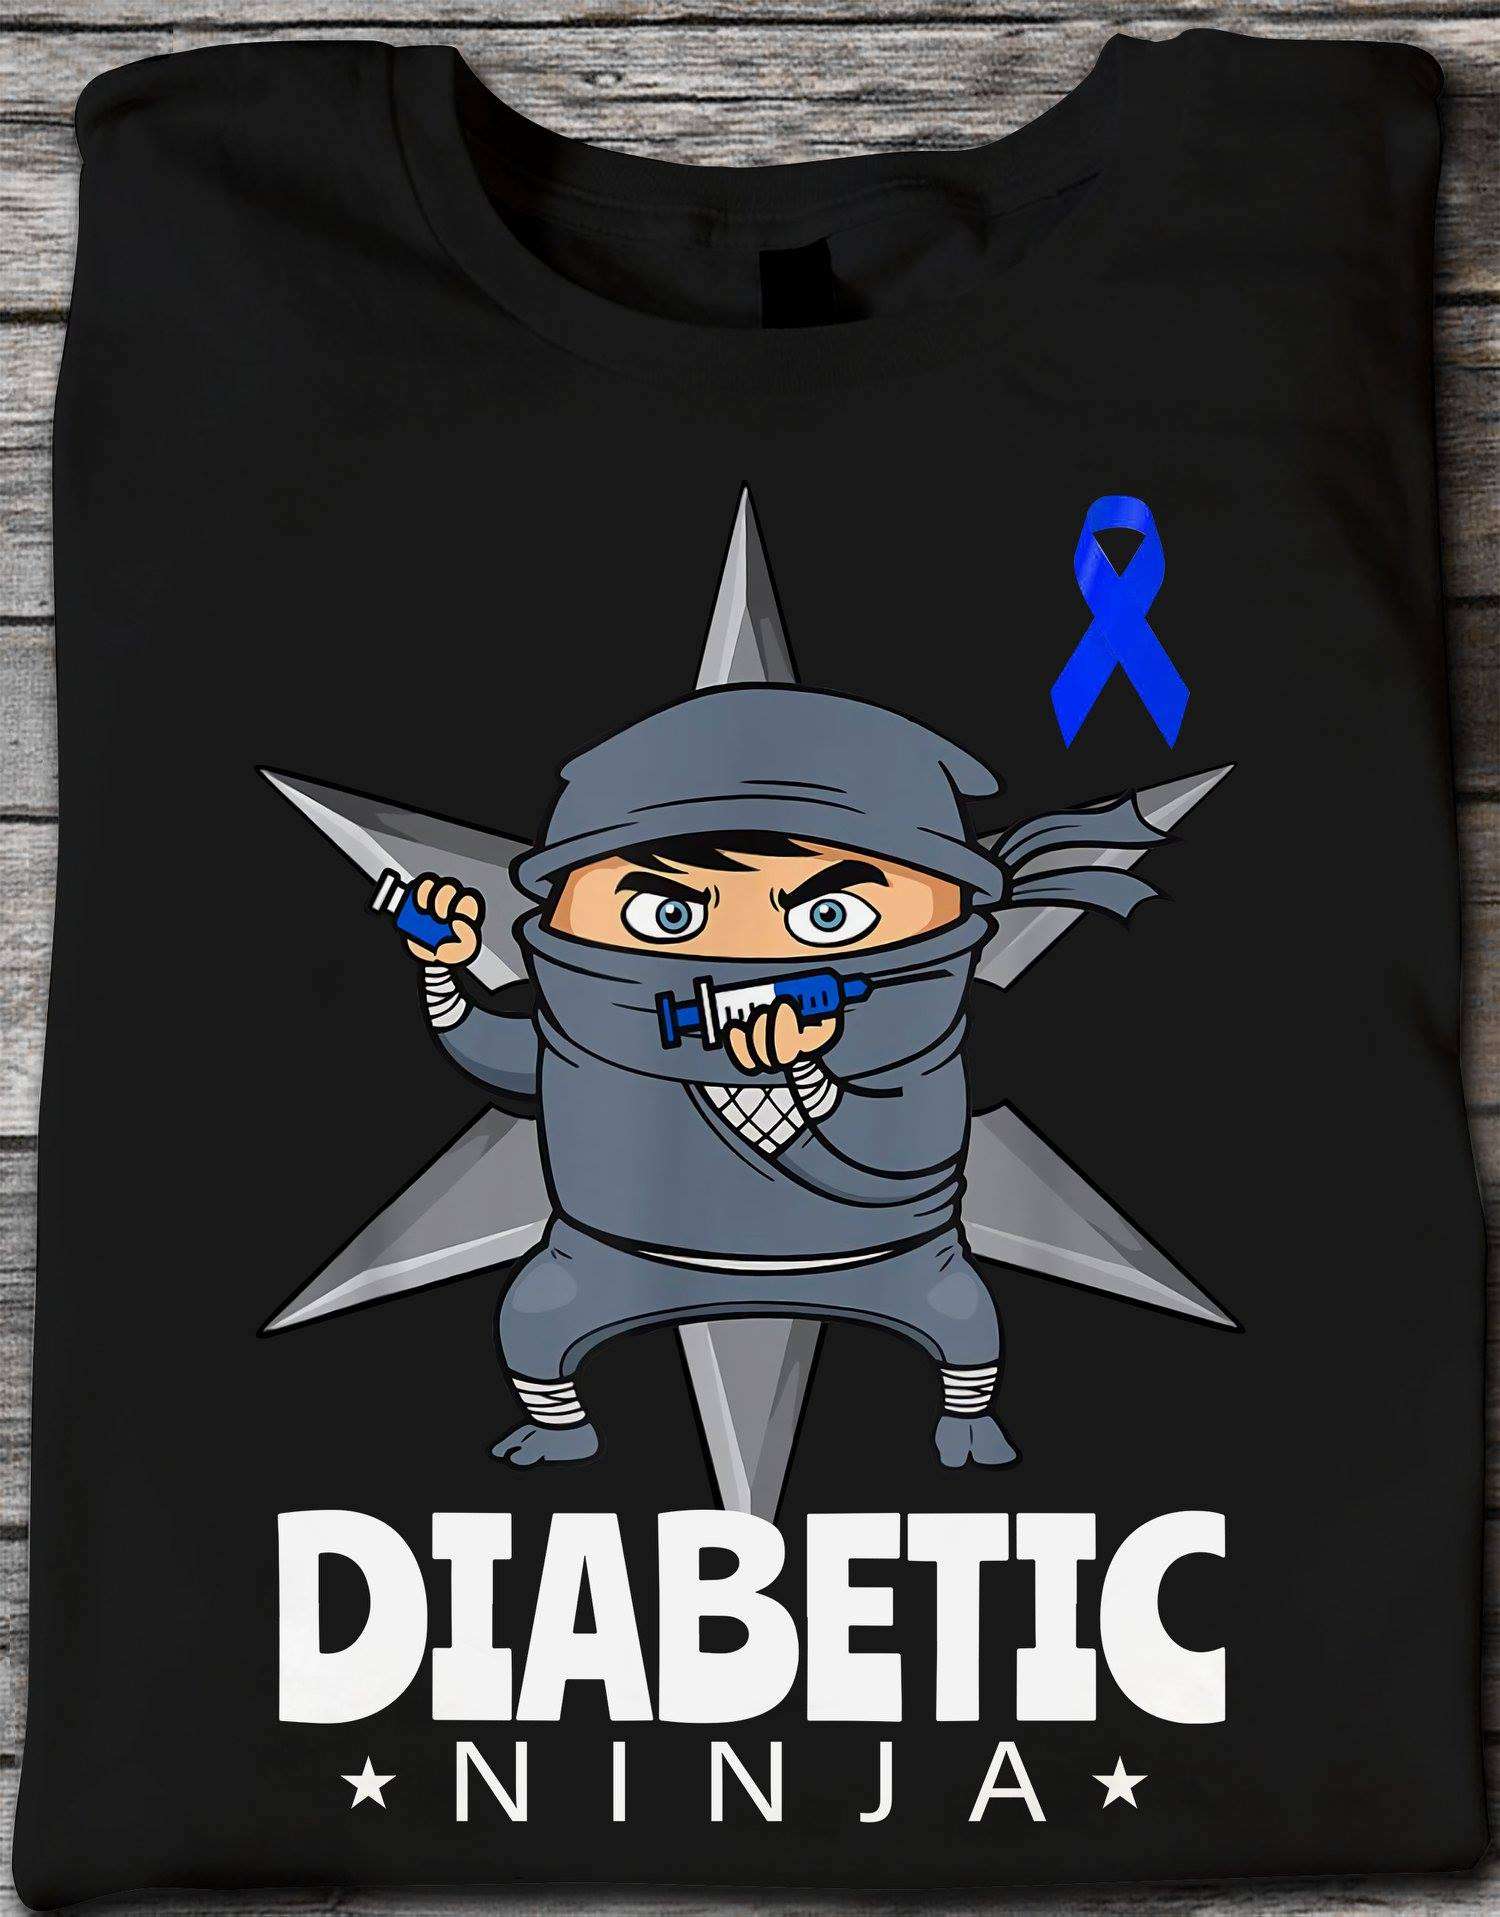 Diabetic ninja - Diabetes awareness, Ninja with Insulin